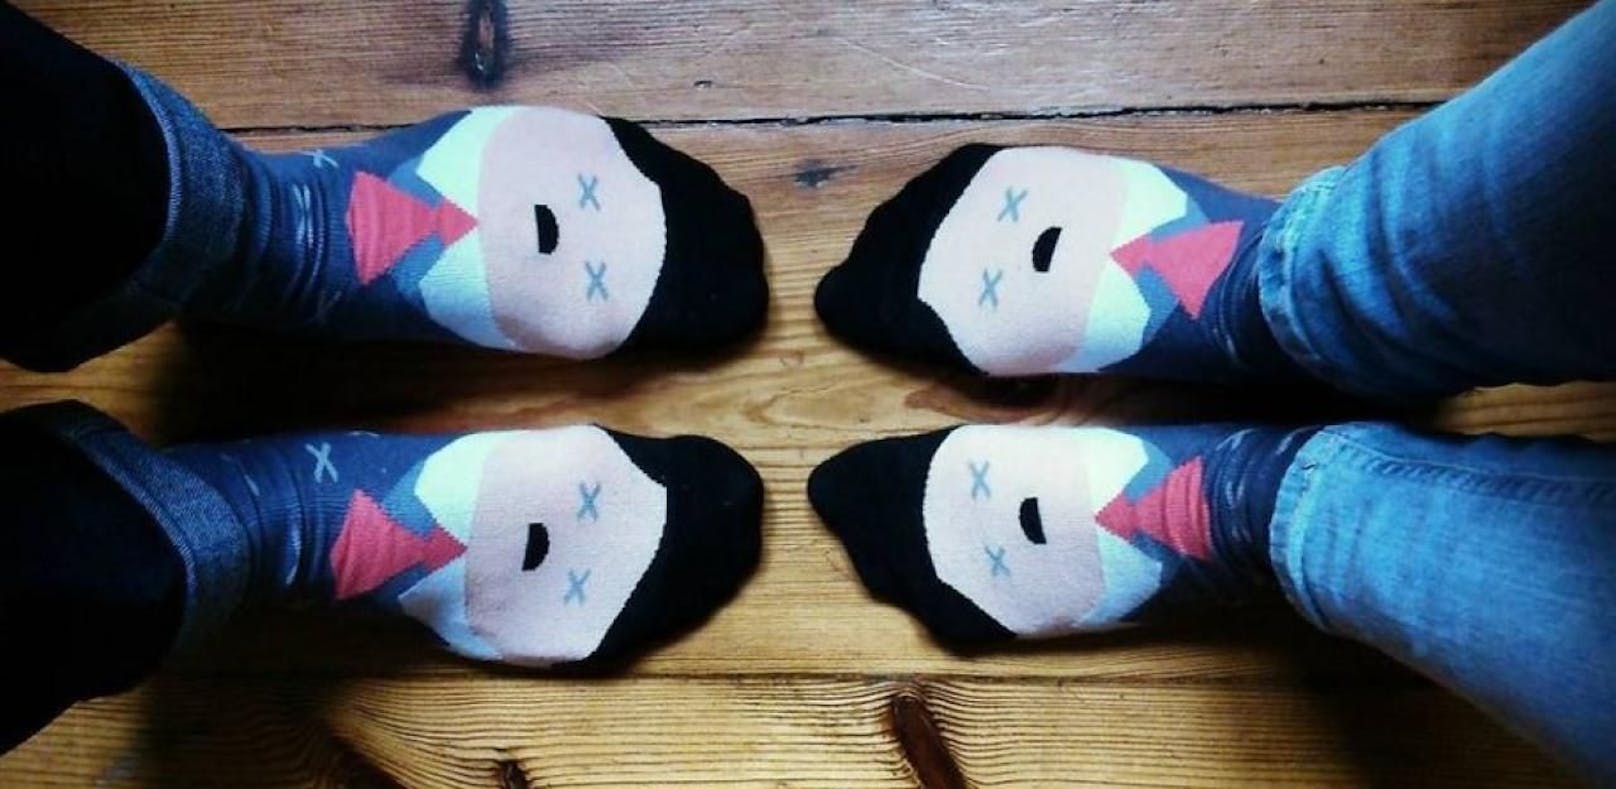 Polnische Firma verkauft Hitler-Socken